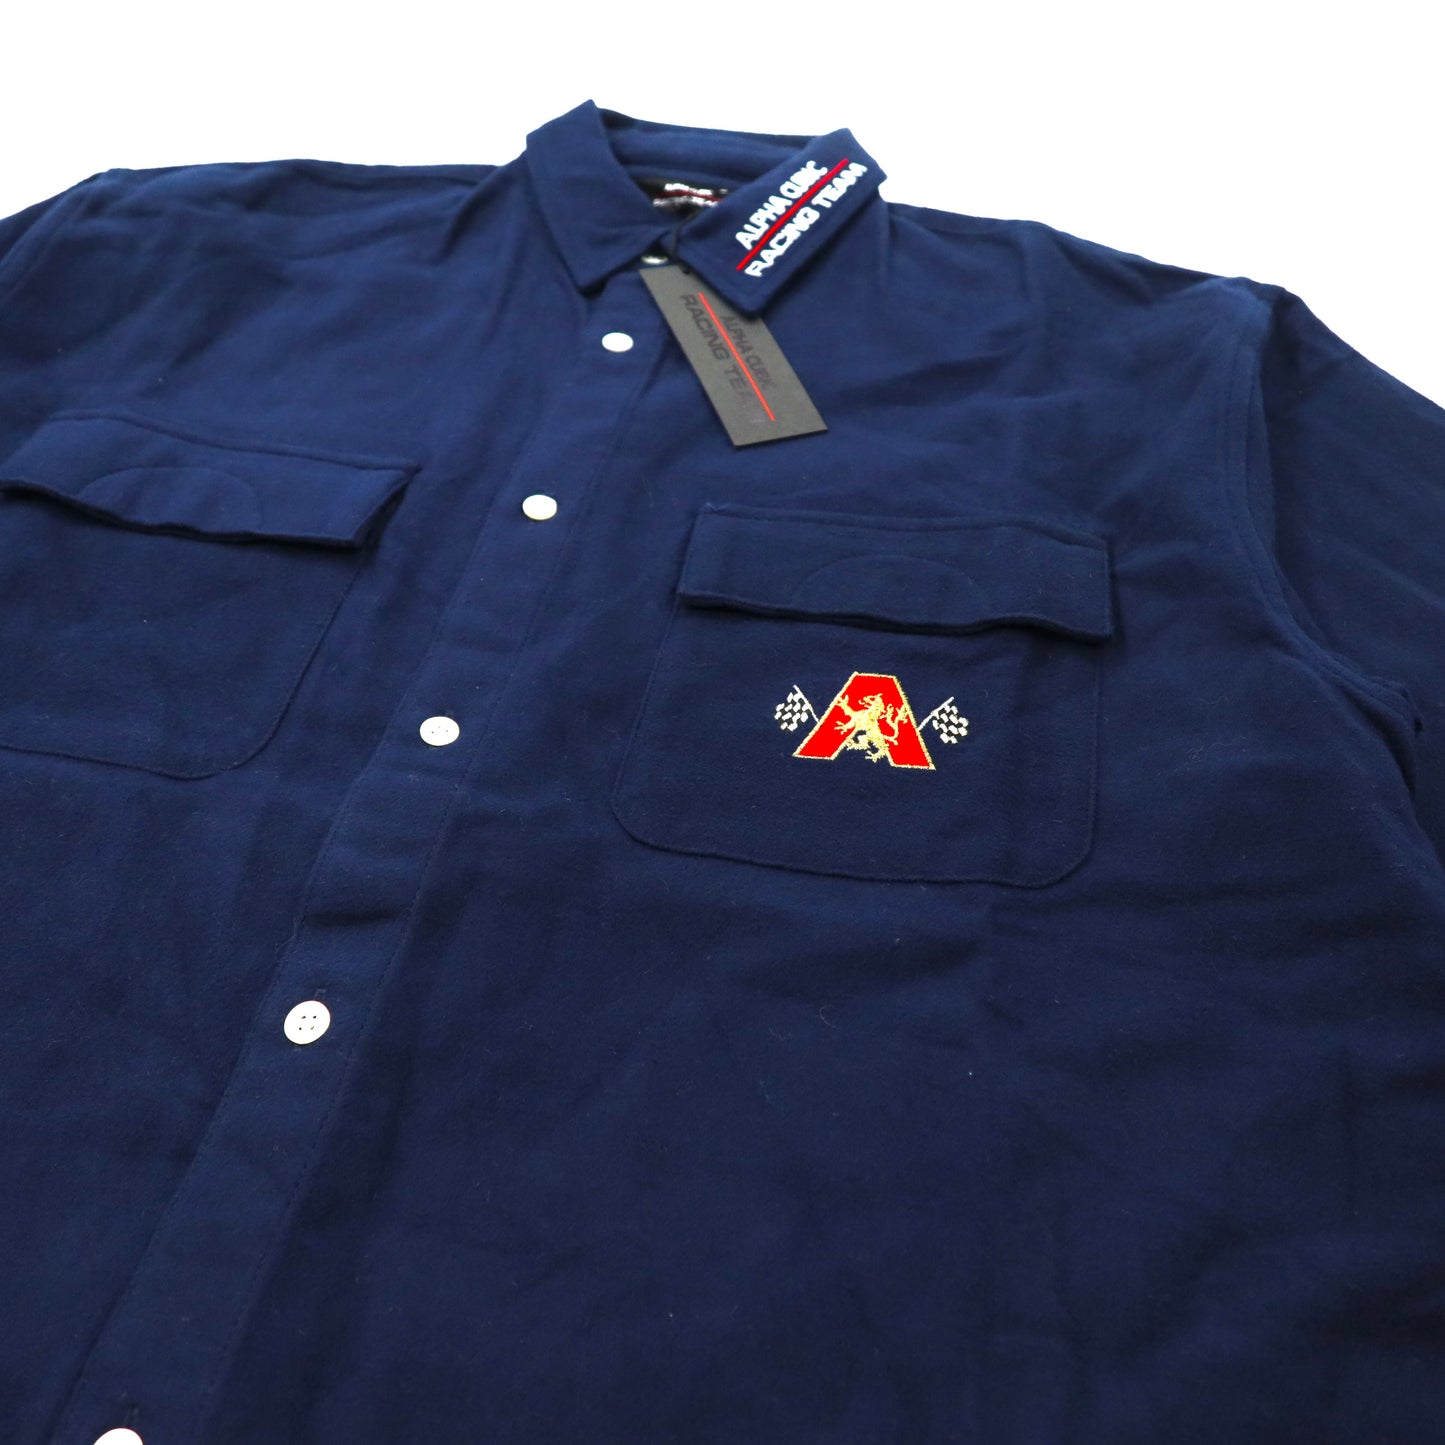 ALPHA CUBIC RACING TEAM ネルシャツ 46 ネイビー コットン 80年代 日本製 未使用品